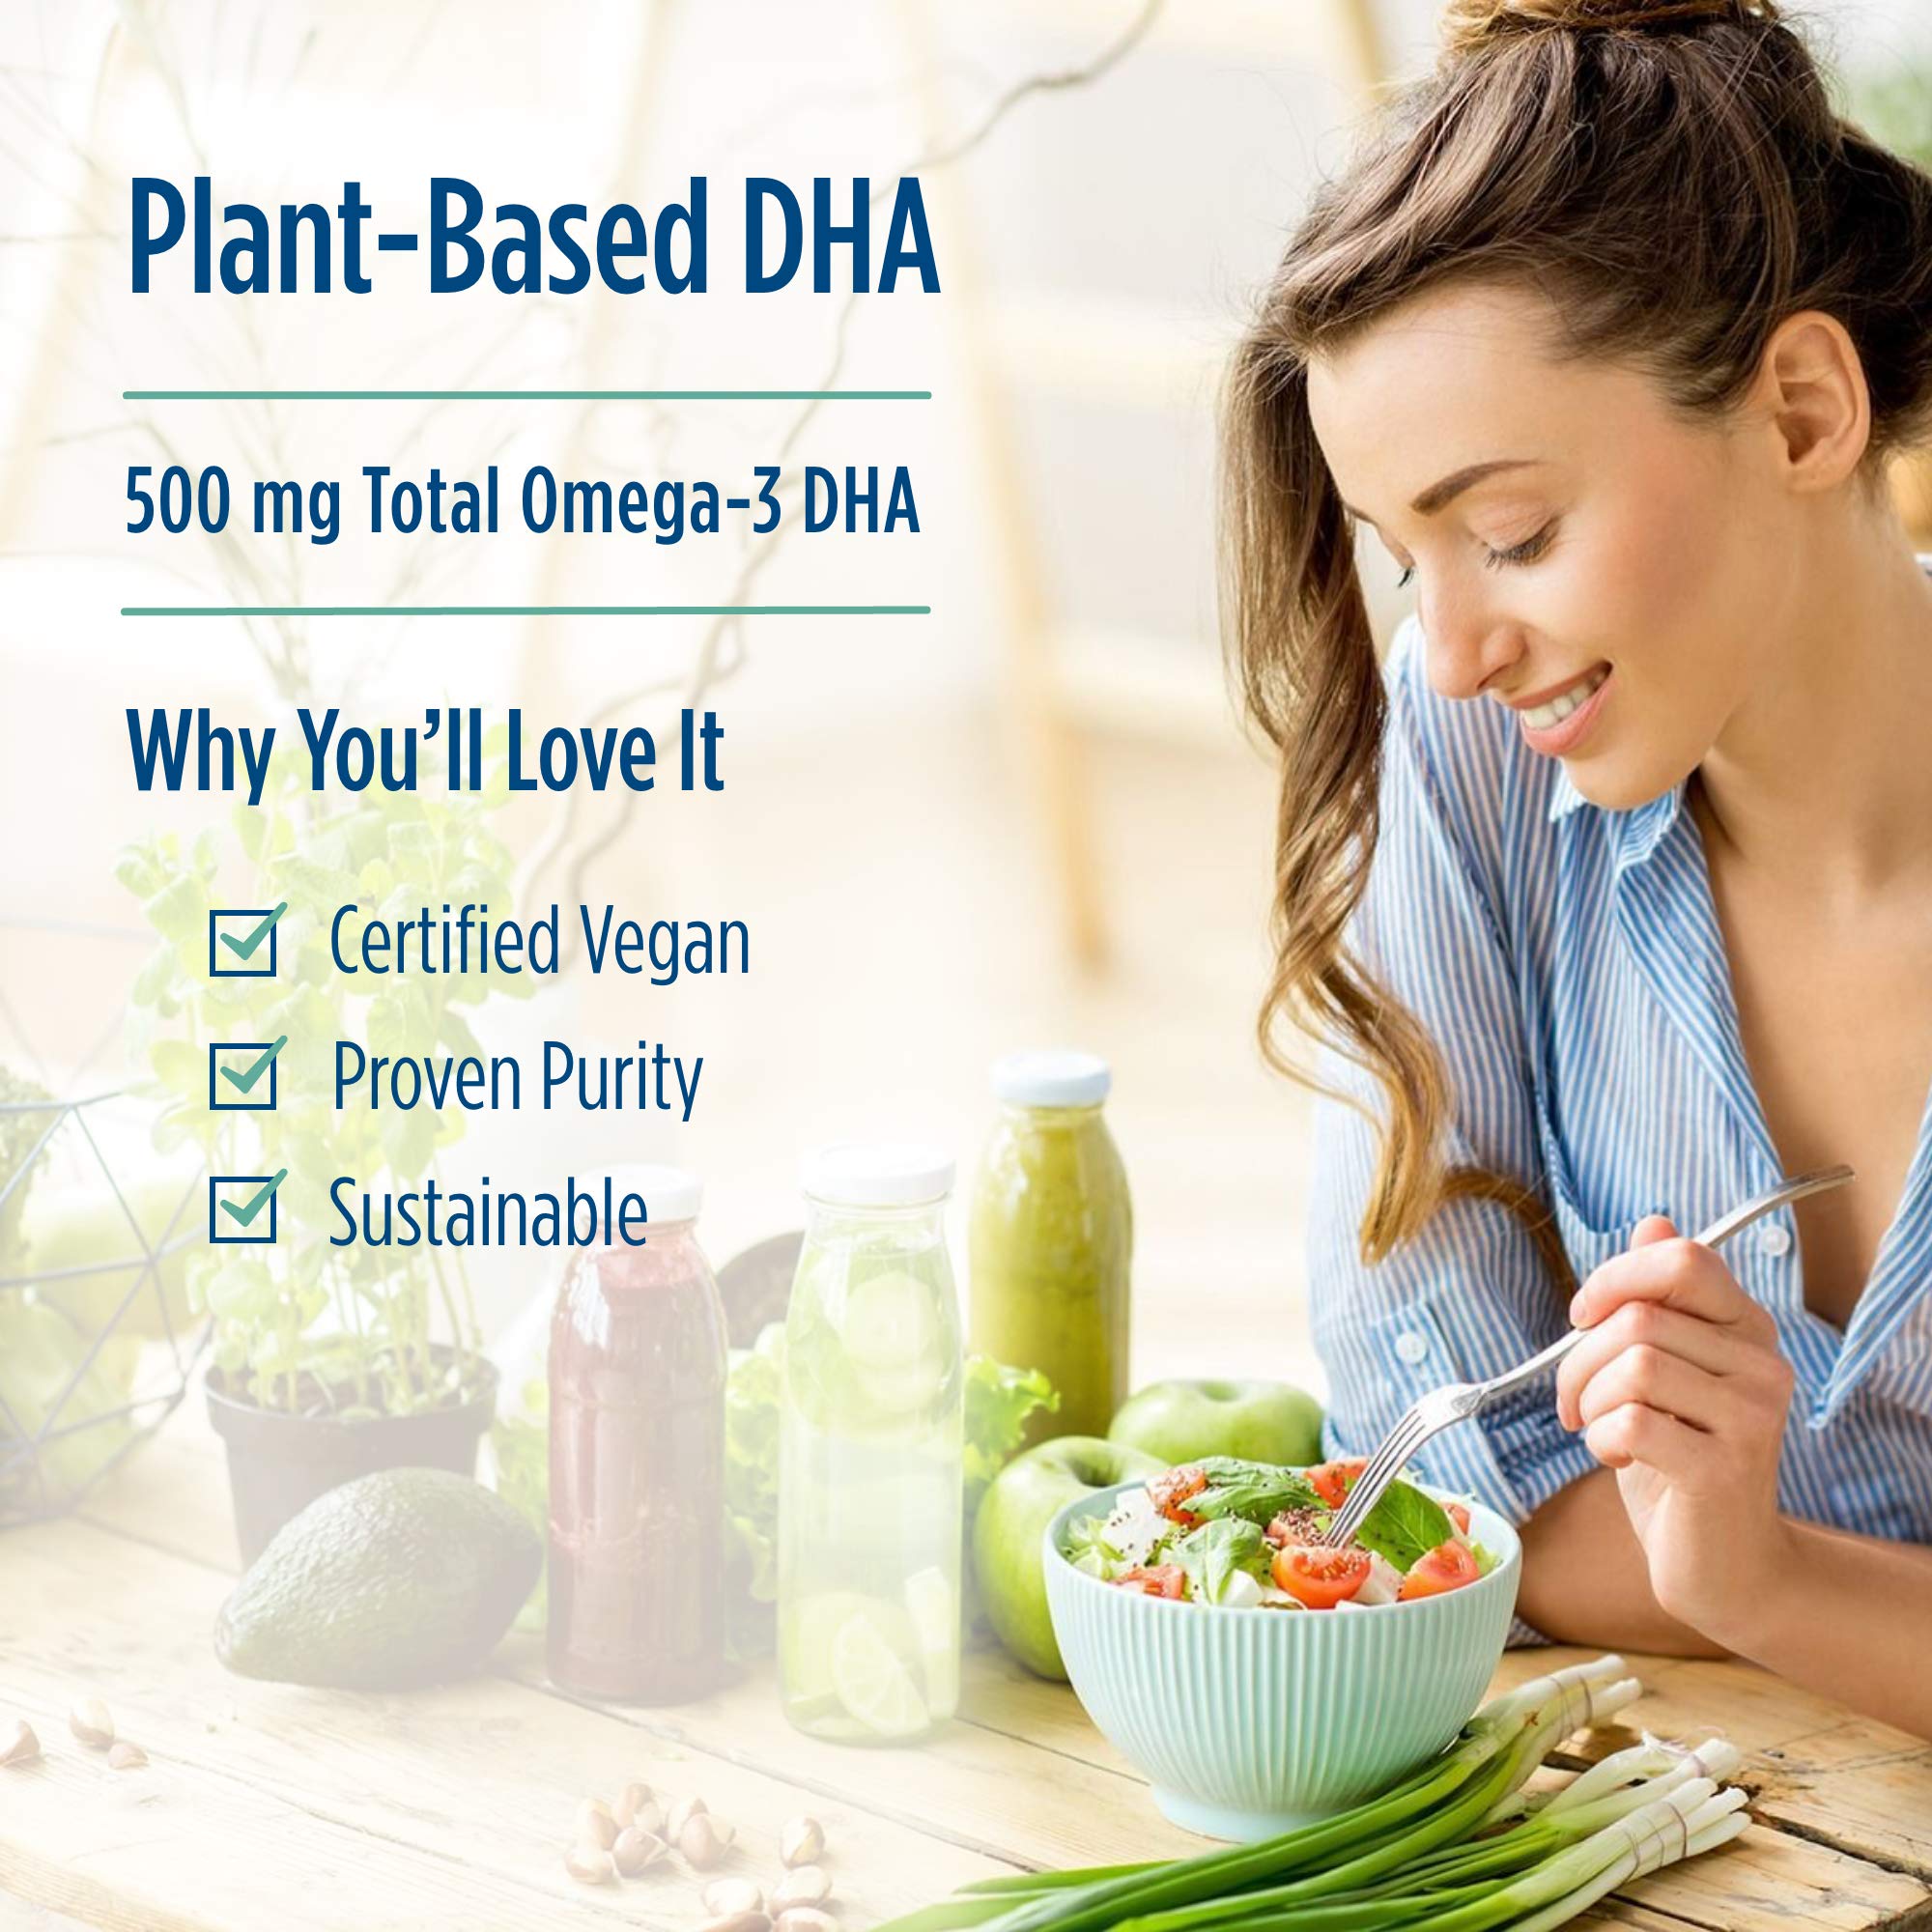 Nordic Naturals Algae DHA - 60 Soft Gels - 500 mg Omega-3 DHA - Certified Vegan Algae Oil - Plant-Based DHA - Brain, Eye & Nervous System Support - Non-GMO - 30 Servings